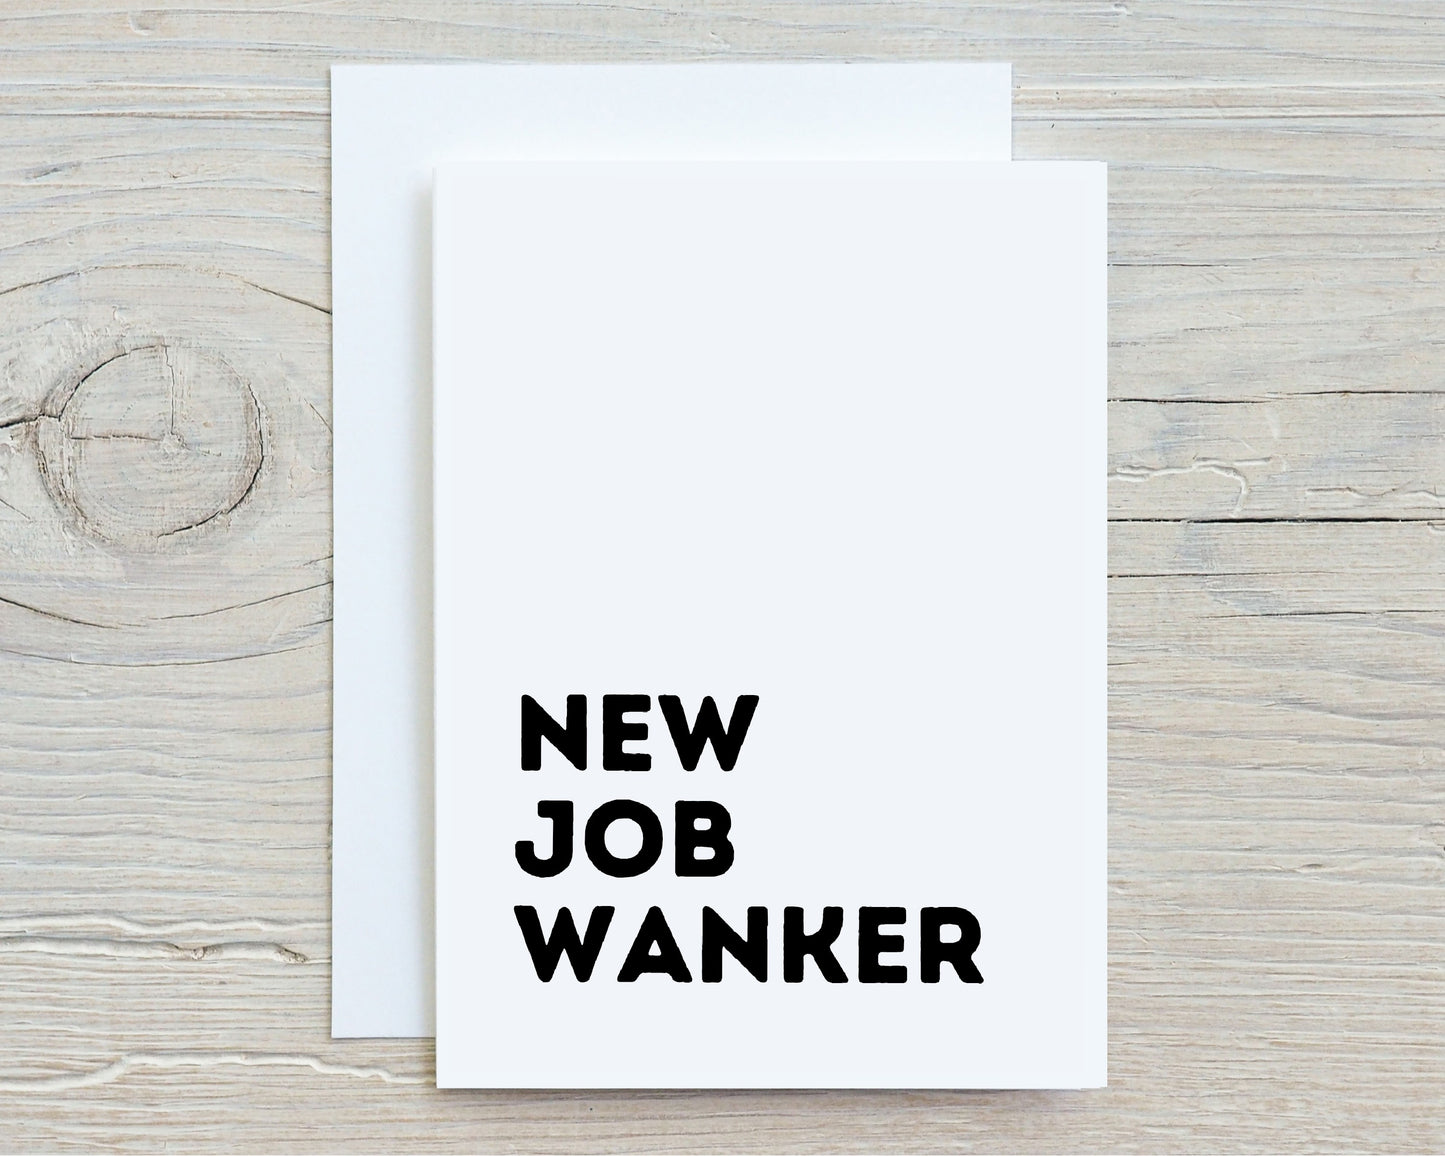 New Job Card | New Job Wanker | Funny Card